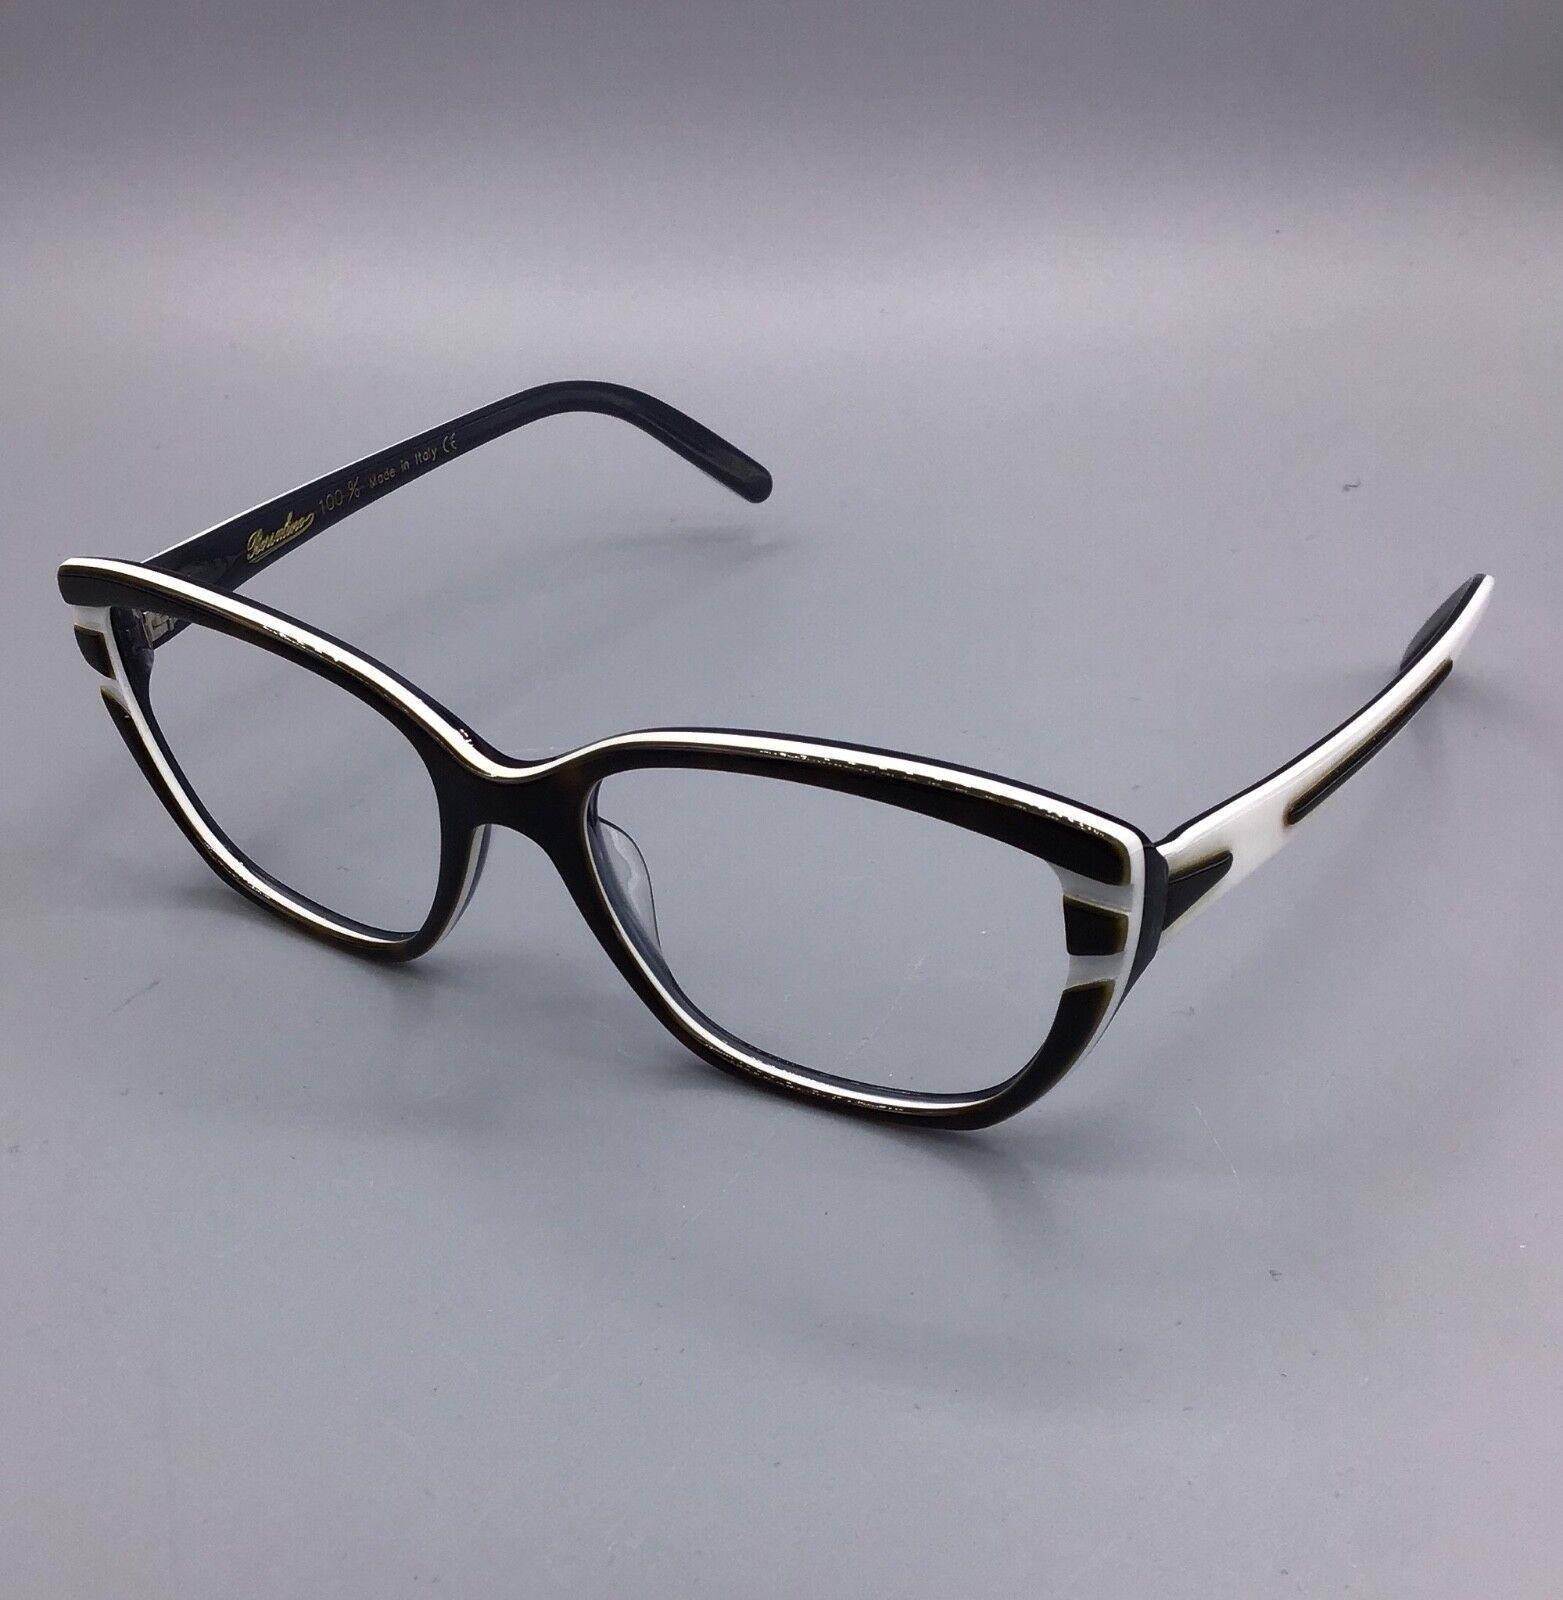 Borsalino occhiale vintage model B172 C2 eyewear frame glasses brillen lunettes gafas